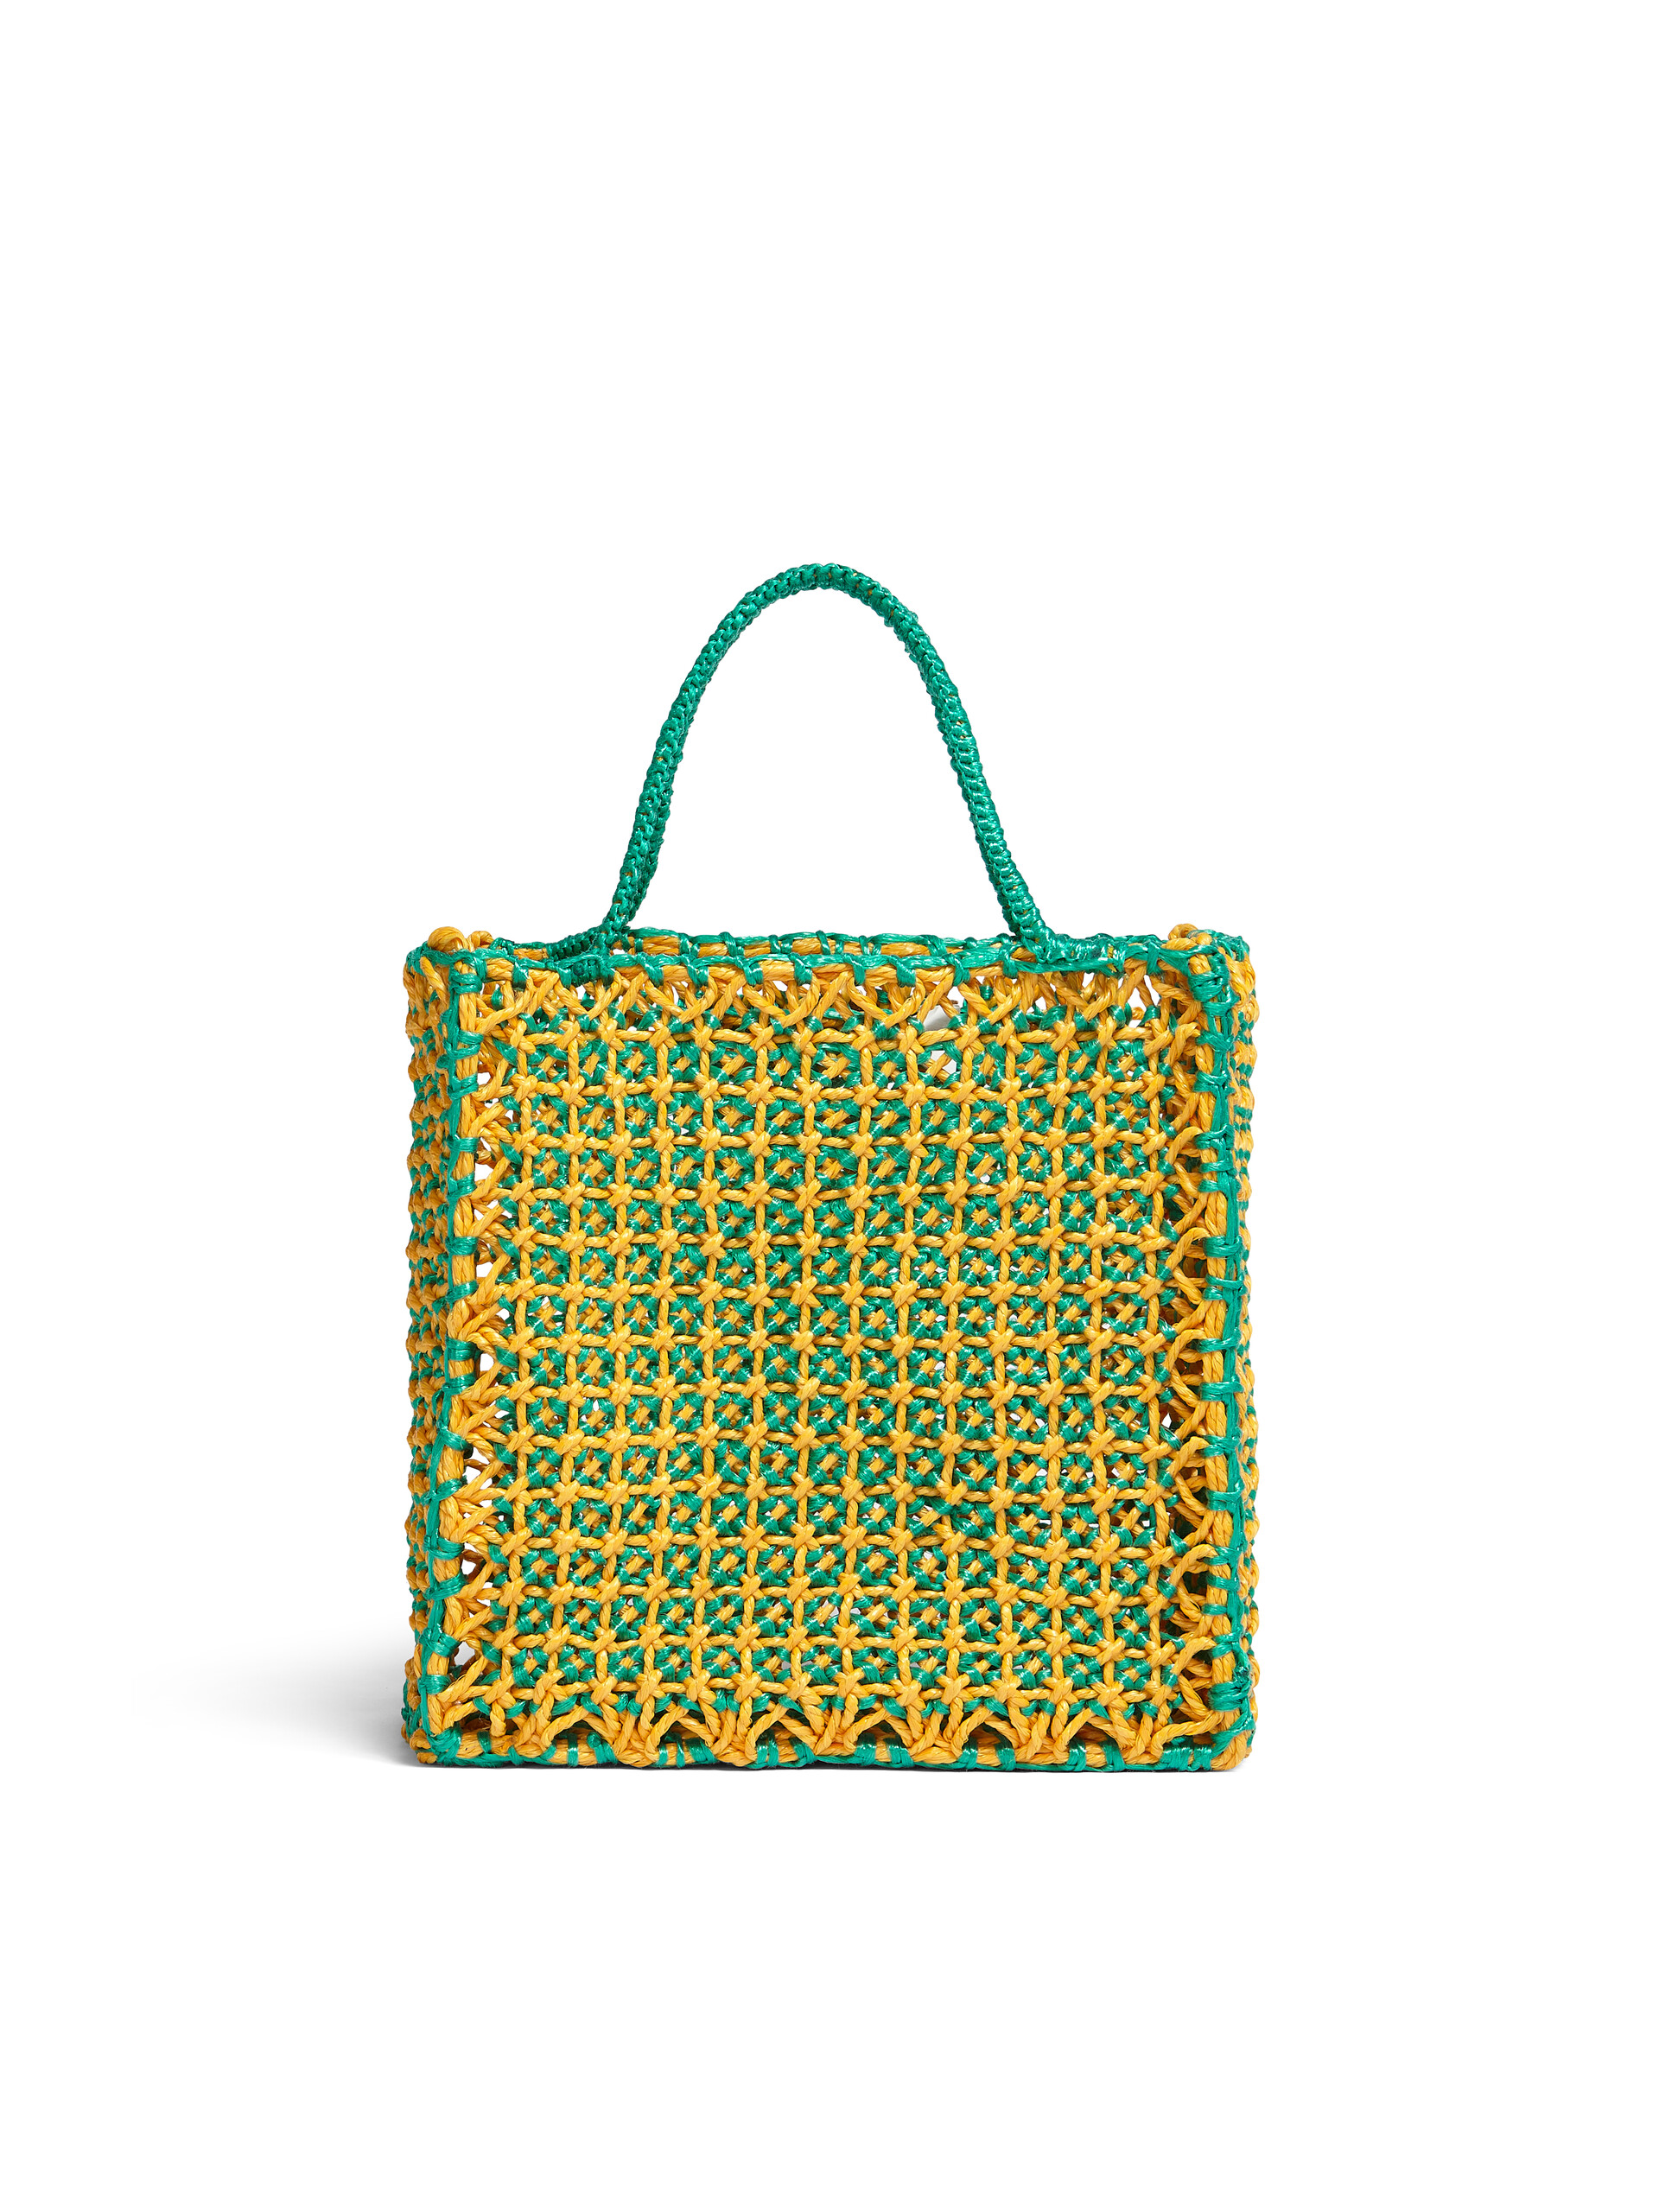 MARNI MARKET MINI JURTA bag in red yellow and green crochet - Shopping Bags - Image 3